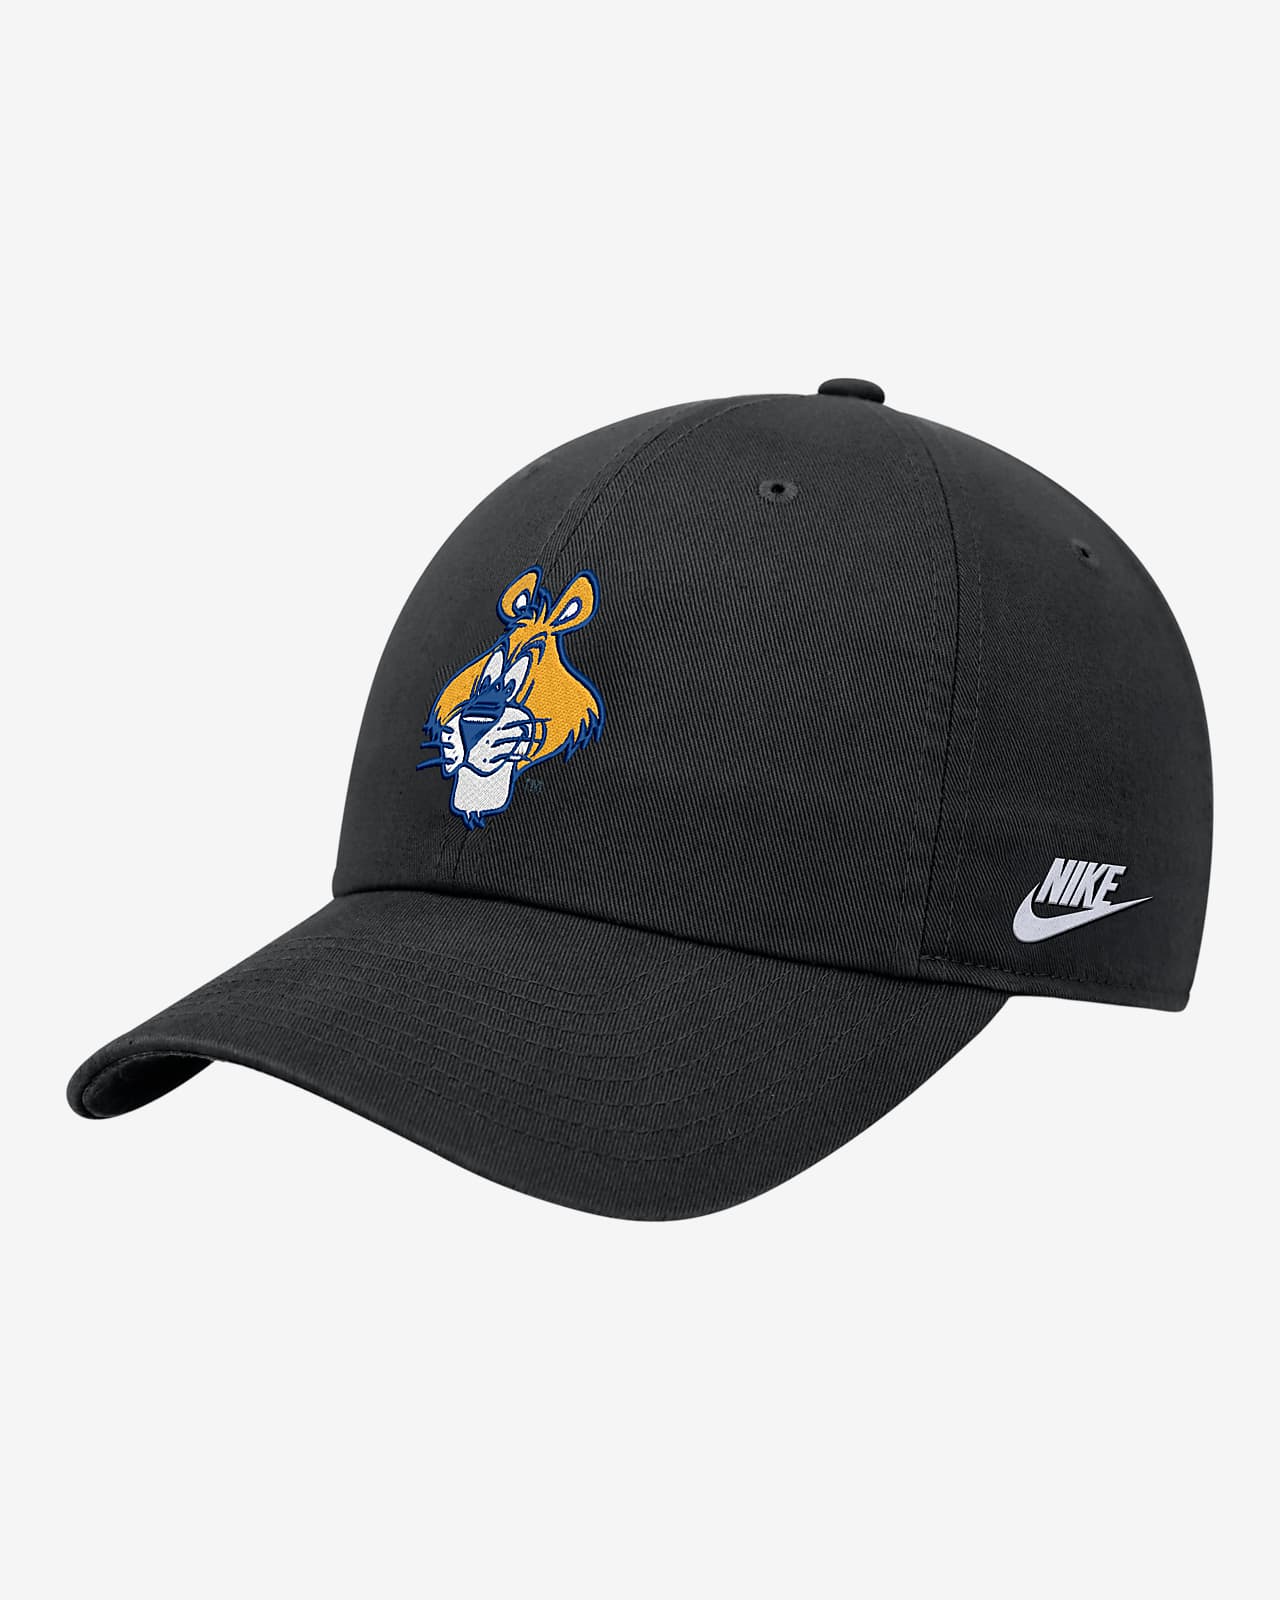 Pitt Nike College Cap